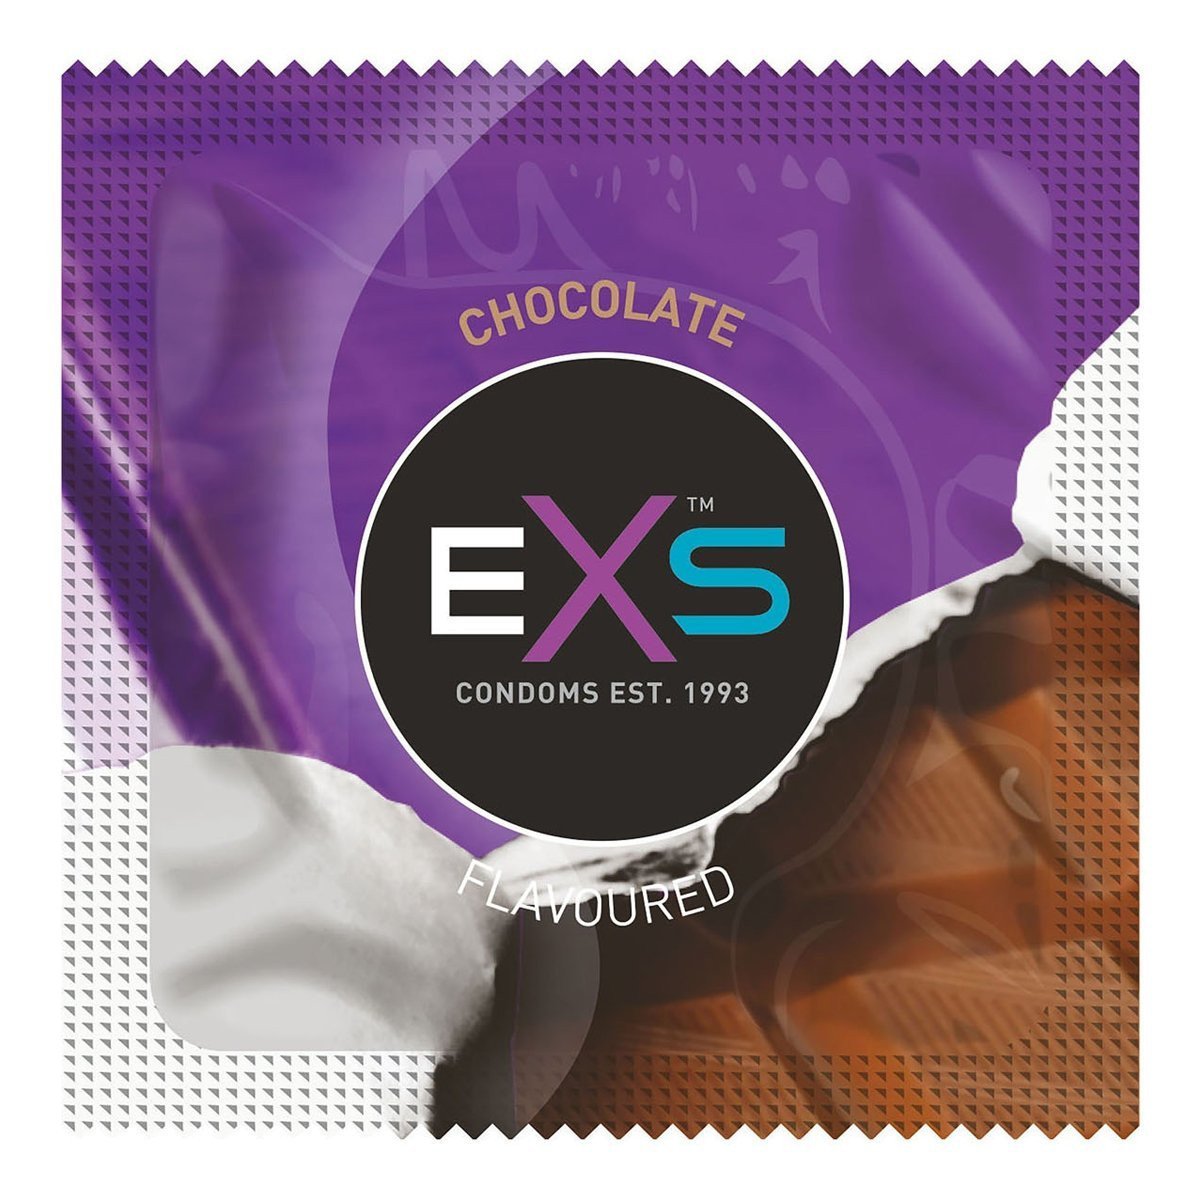 Prezervatyvų rinkinys „Variety Pack 1“, 48 vnt. - EXS Condoms